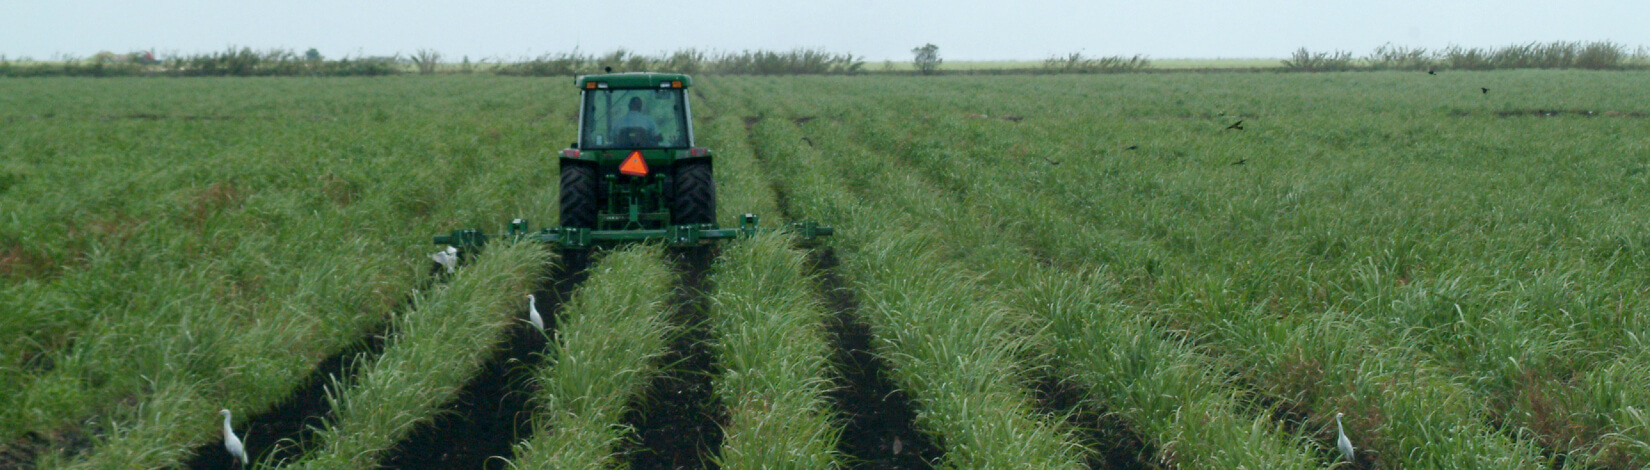 tractor plowing a field for bioenergy crop